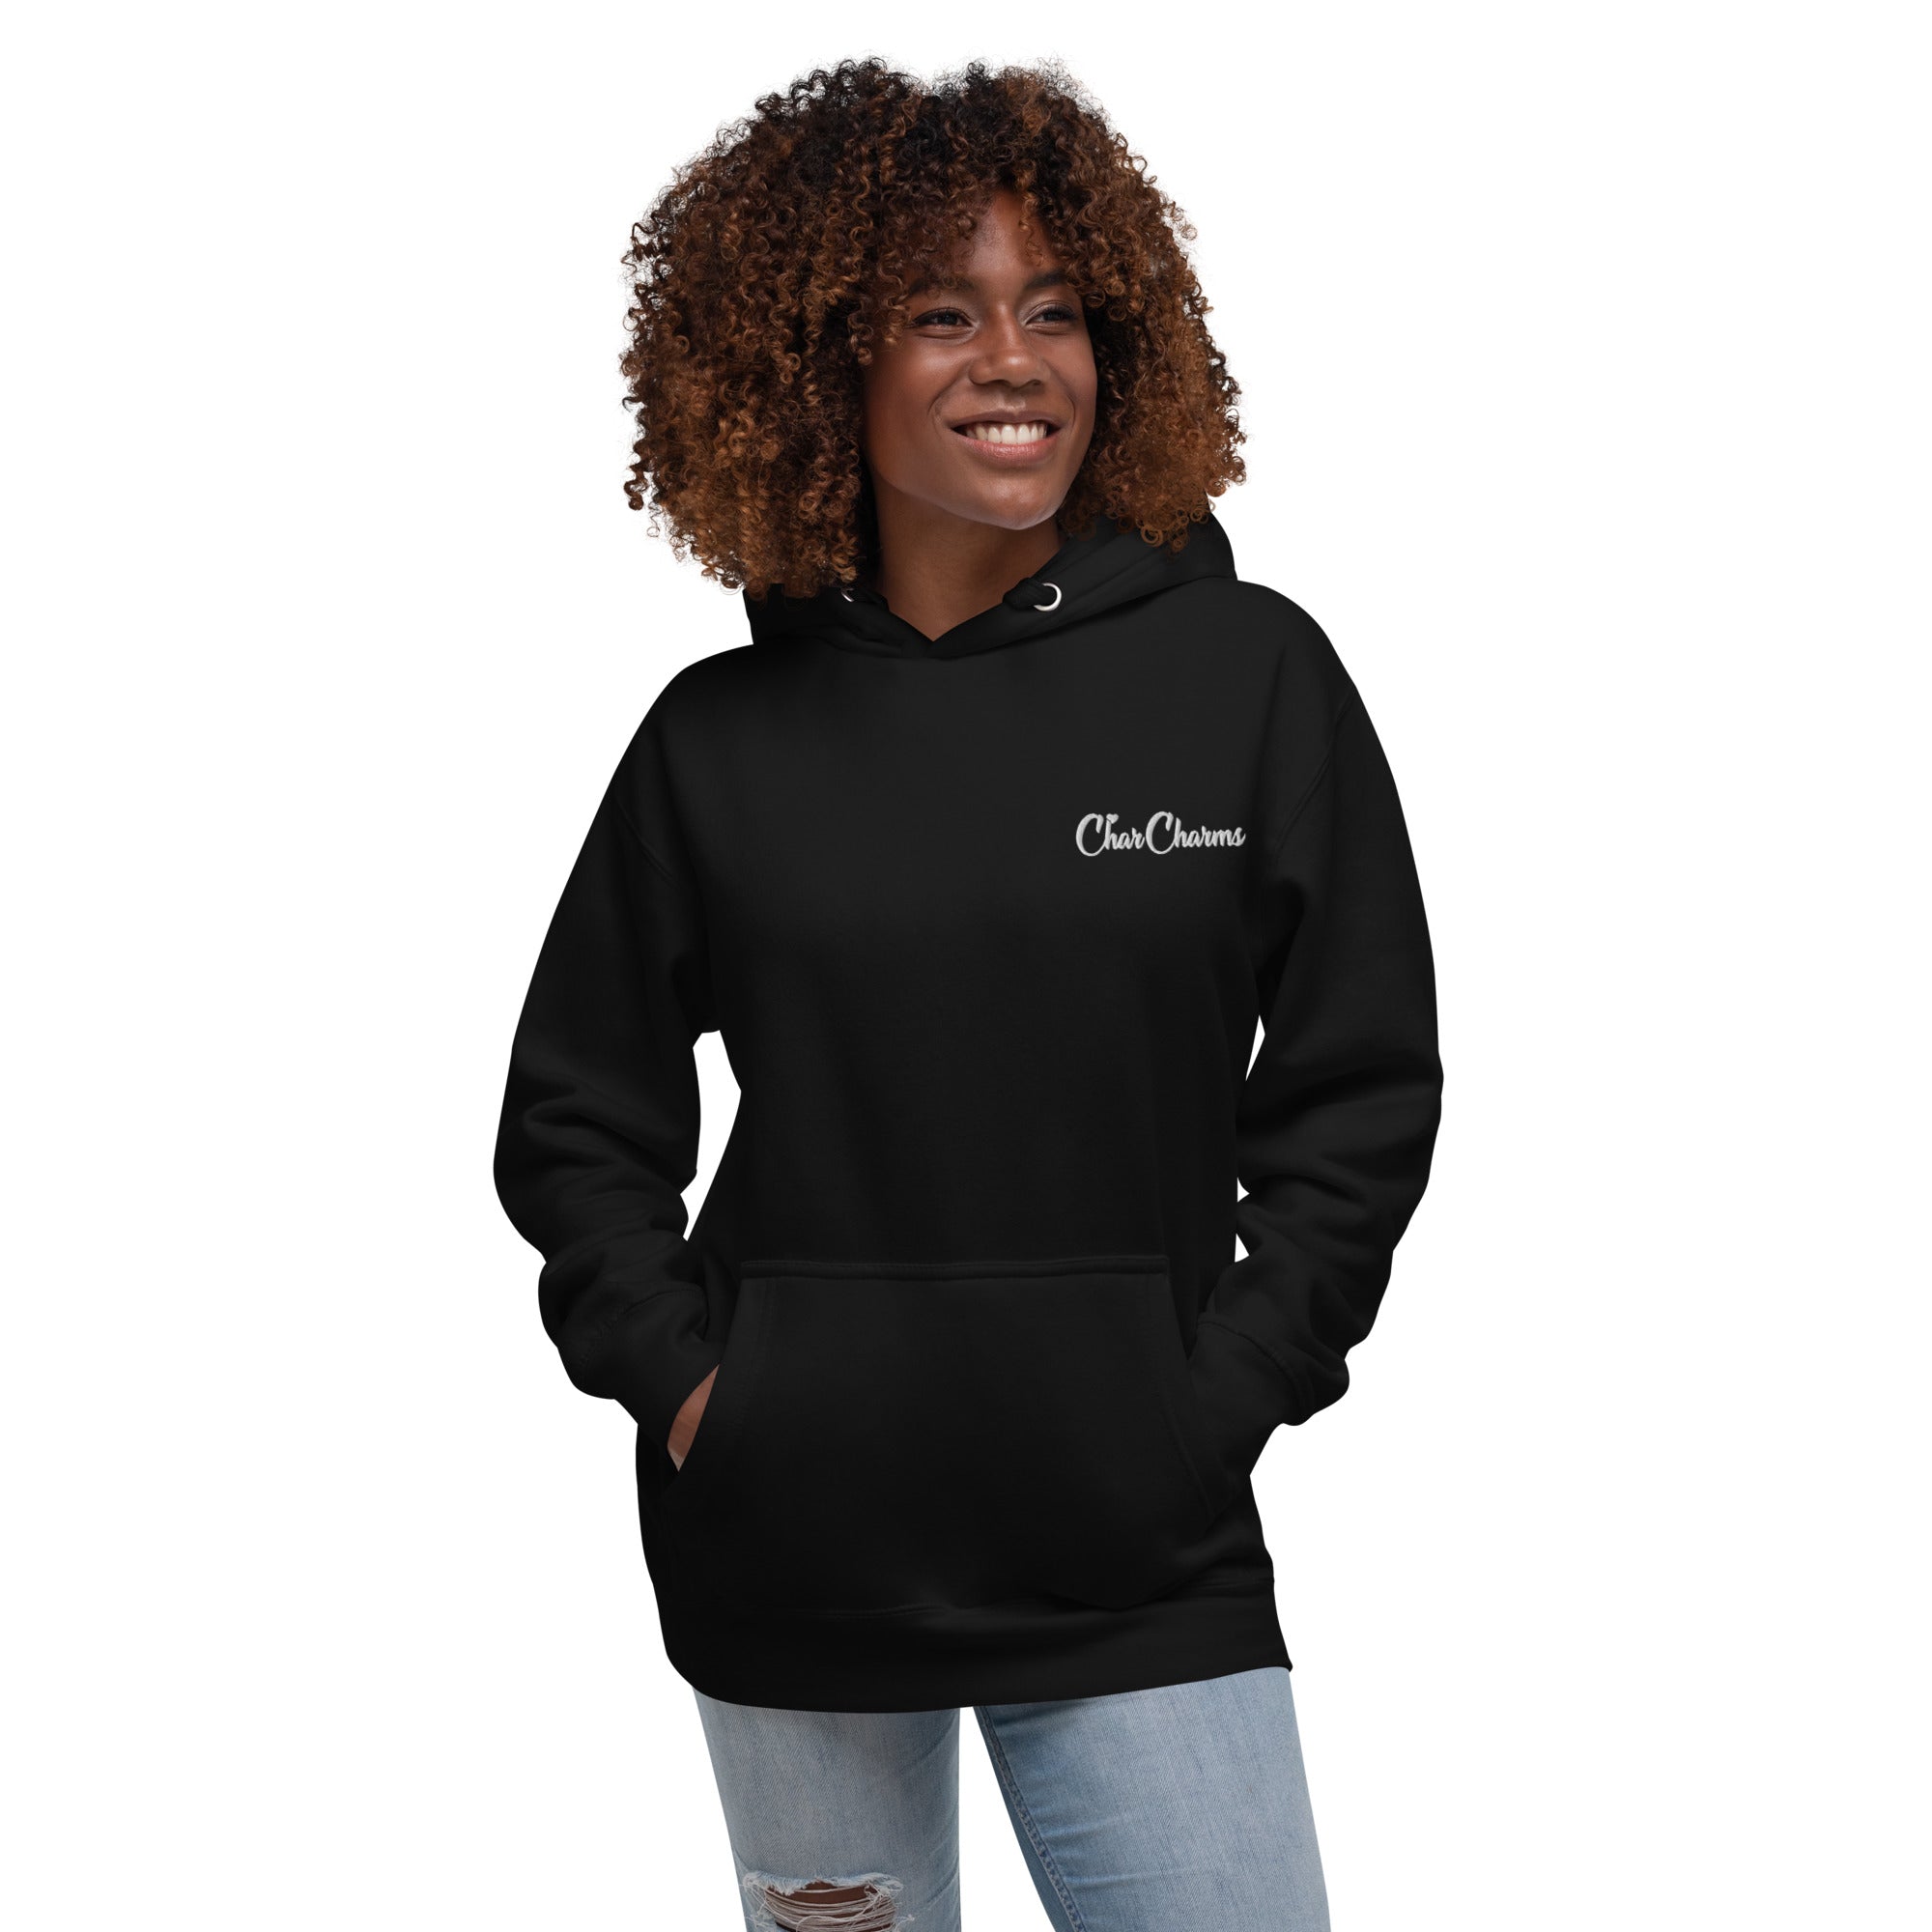 CharCharms Merchandise Black Sweatshirt Hoodie